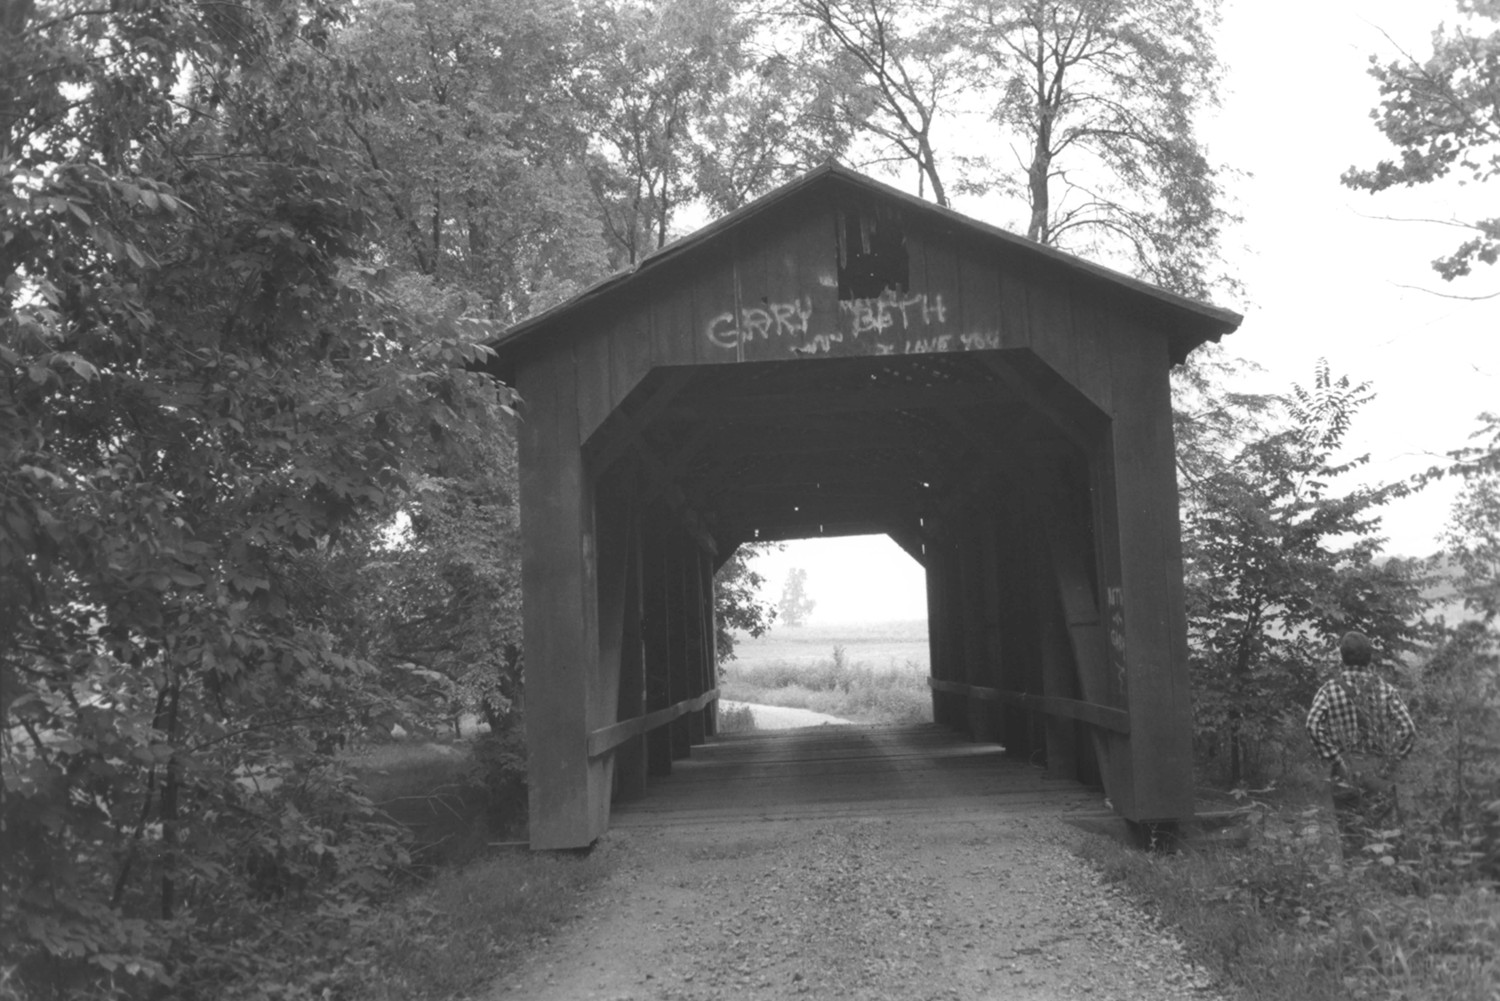 Belle Hall Covered Bridge, Croton Ohio South portal of bridge, looking north (1975)